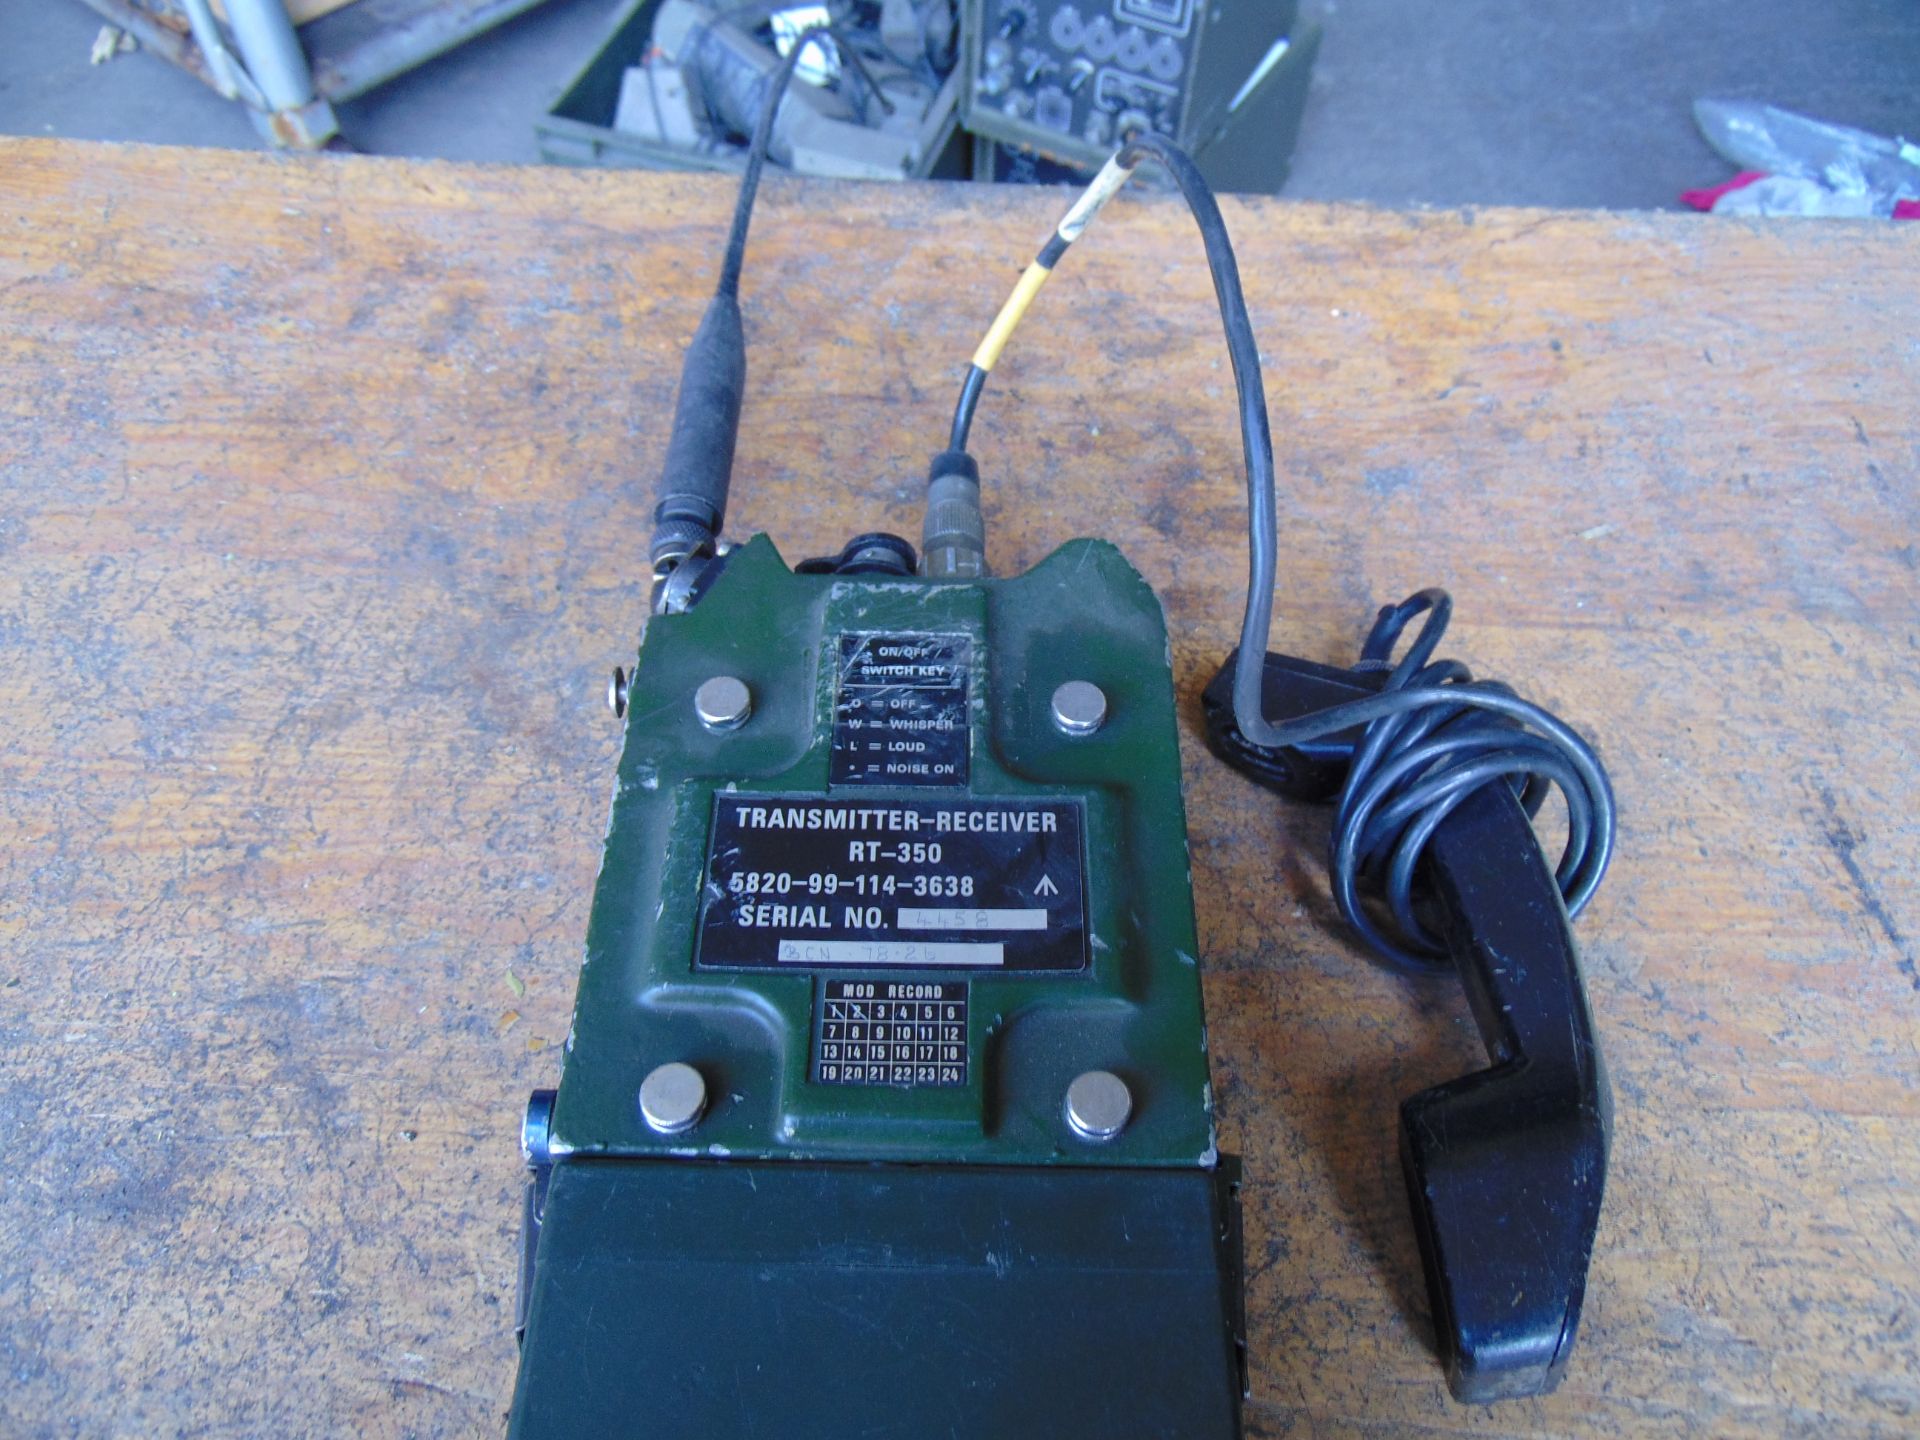 Clansman UK/RT 350 Transmitter Receiver c/w Battery Pack, Antenna & Handset - Image 2 of 4